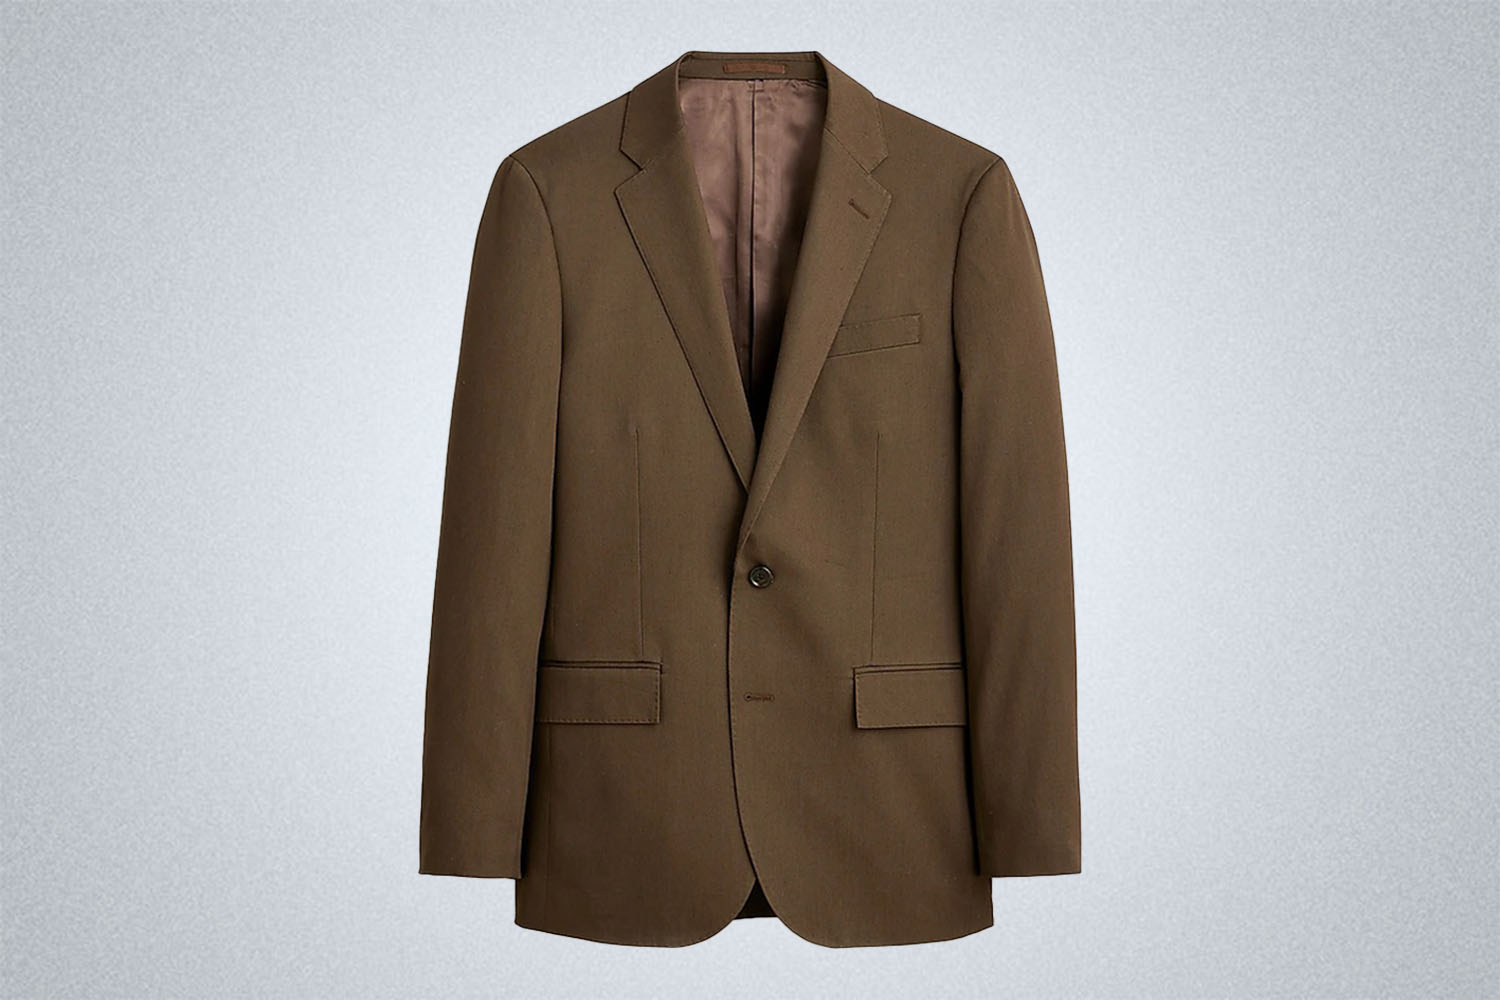 J.Crew Ludlow Italian Chino Slim-Fit Suit Jacket